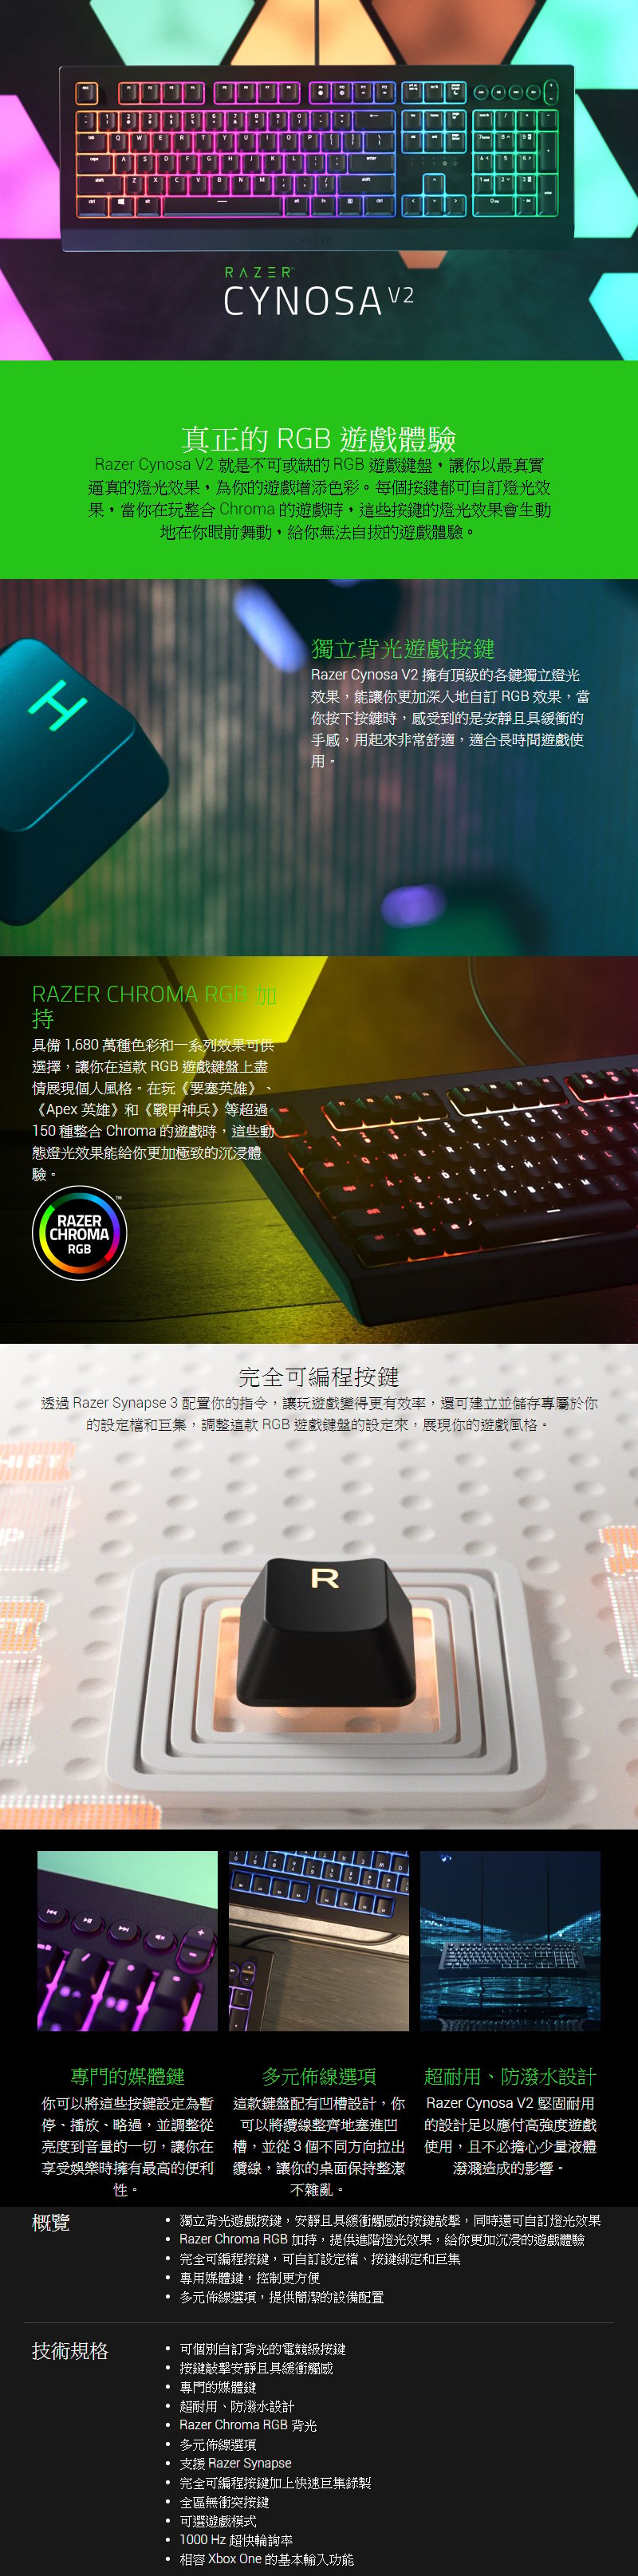 Razer 雷蛇cynosa V2 薩諾狼蛛rgb薄膜式電競鍵盤 中文版 Rz03 R3t1 Autobuy購物中心